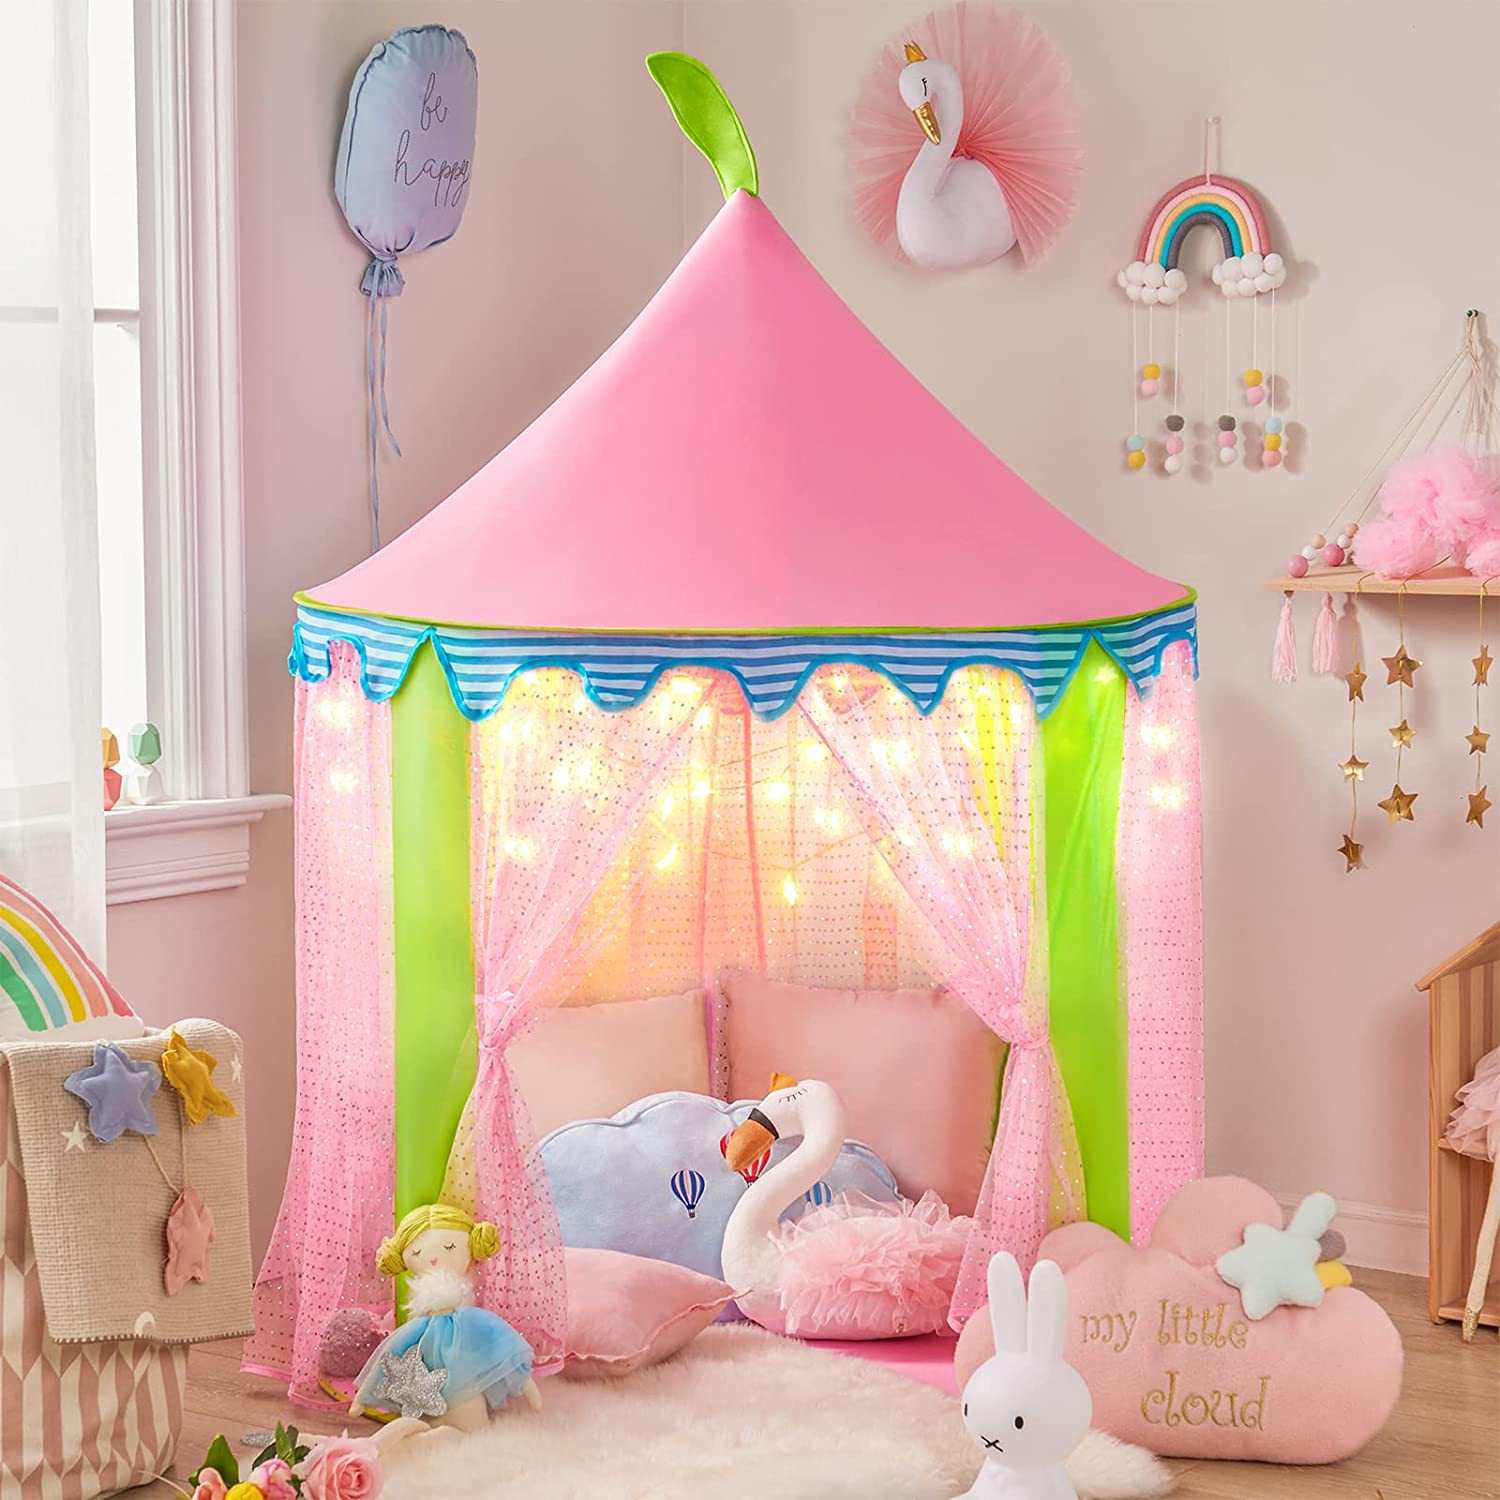  6. Glitter Castle Pop Up Play Tent- Princess Tent 